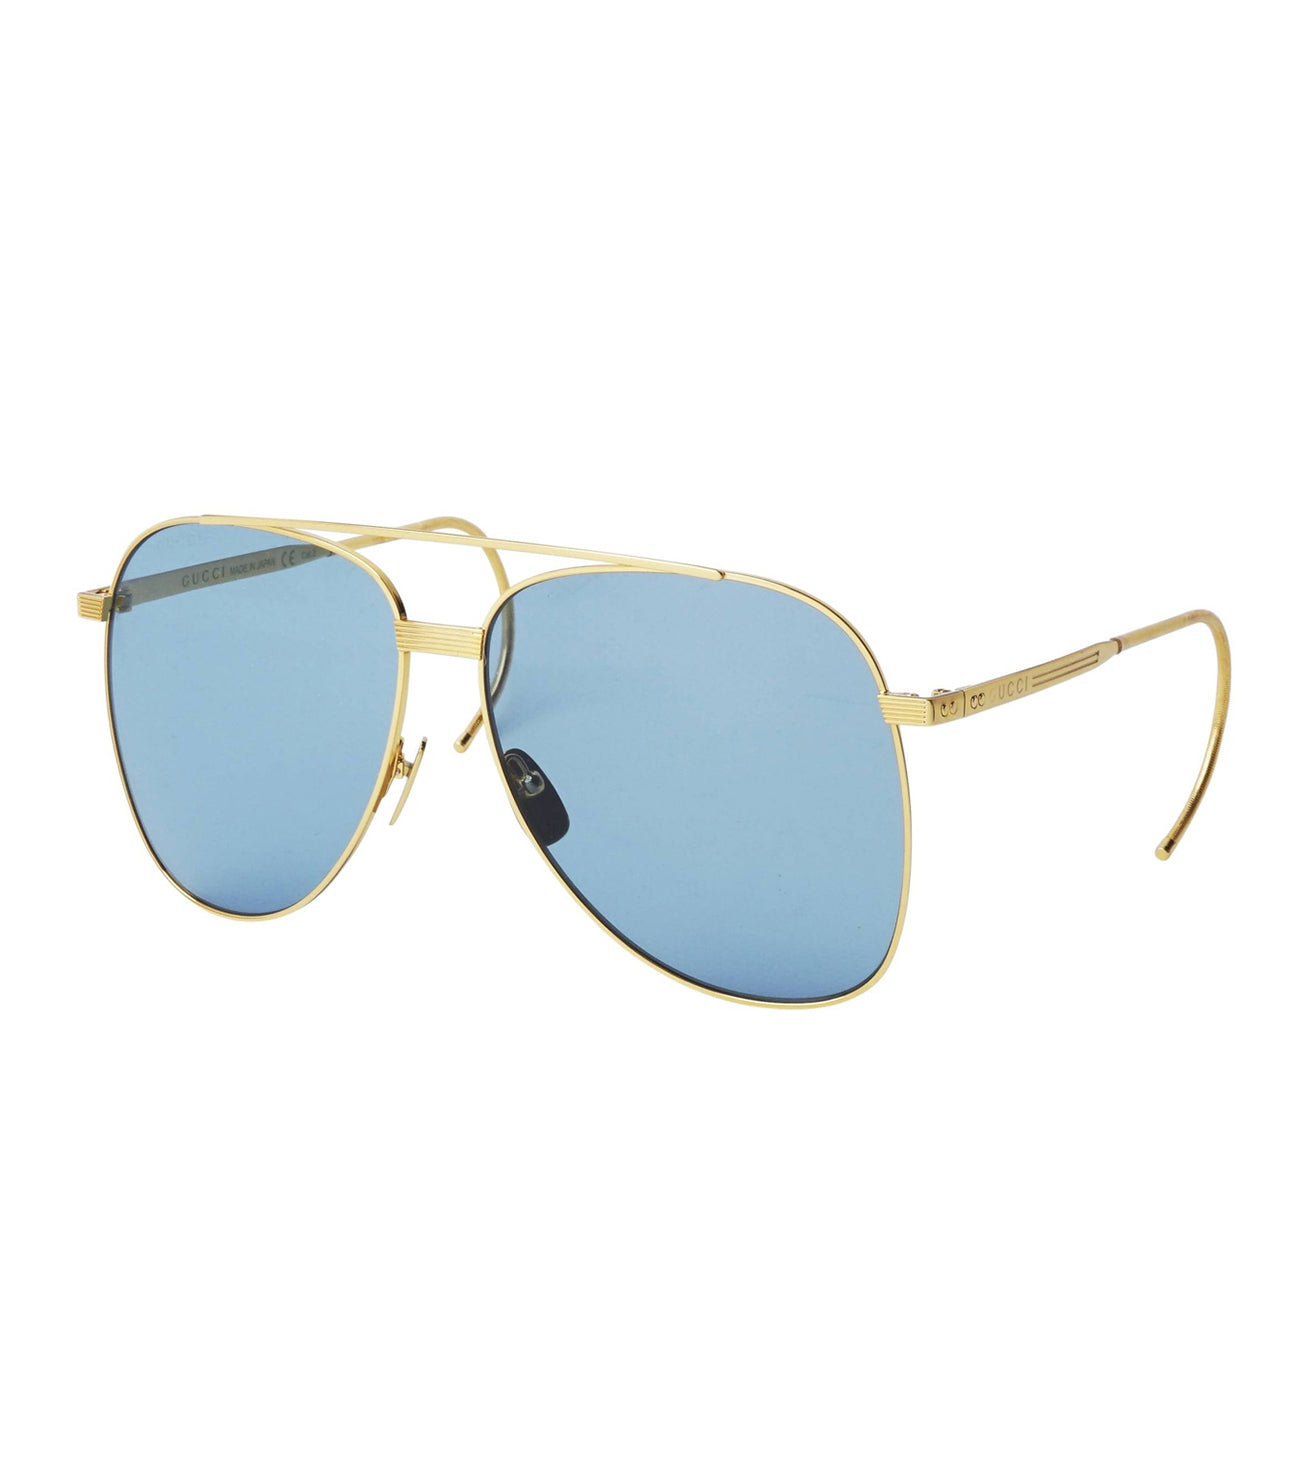 Gucci Men's Turquoise Aviator Sunglasses